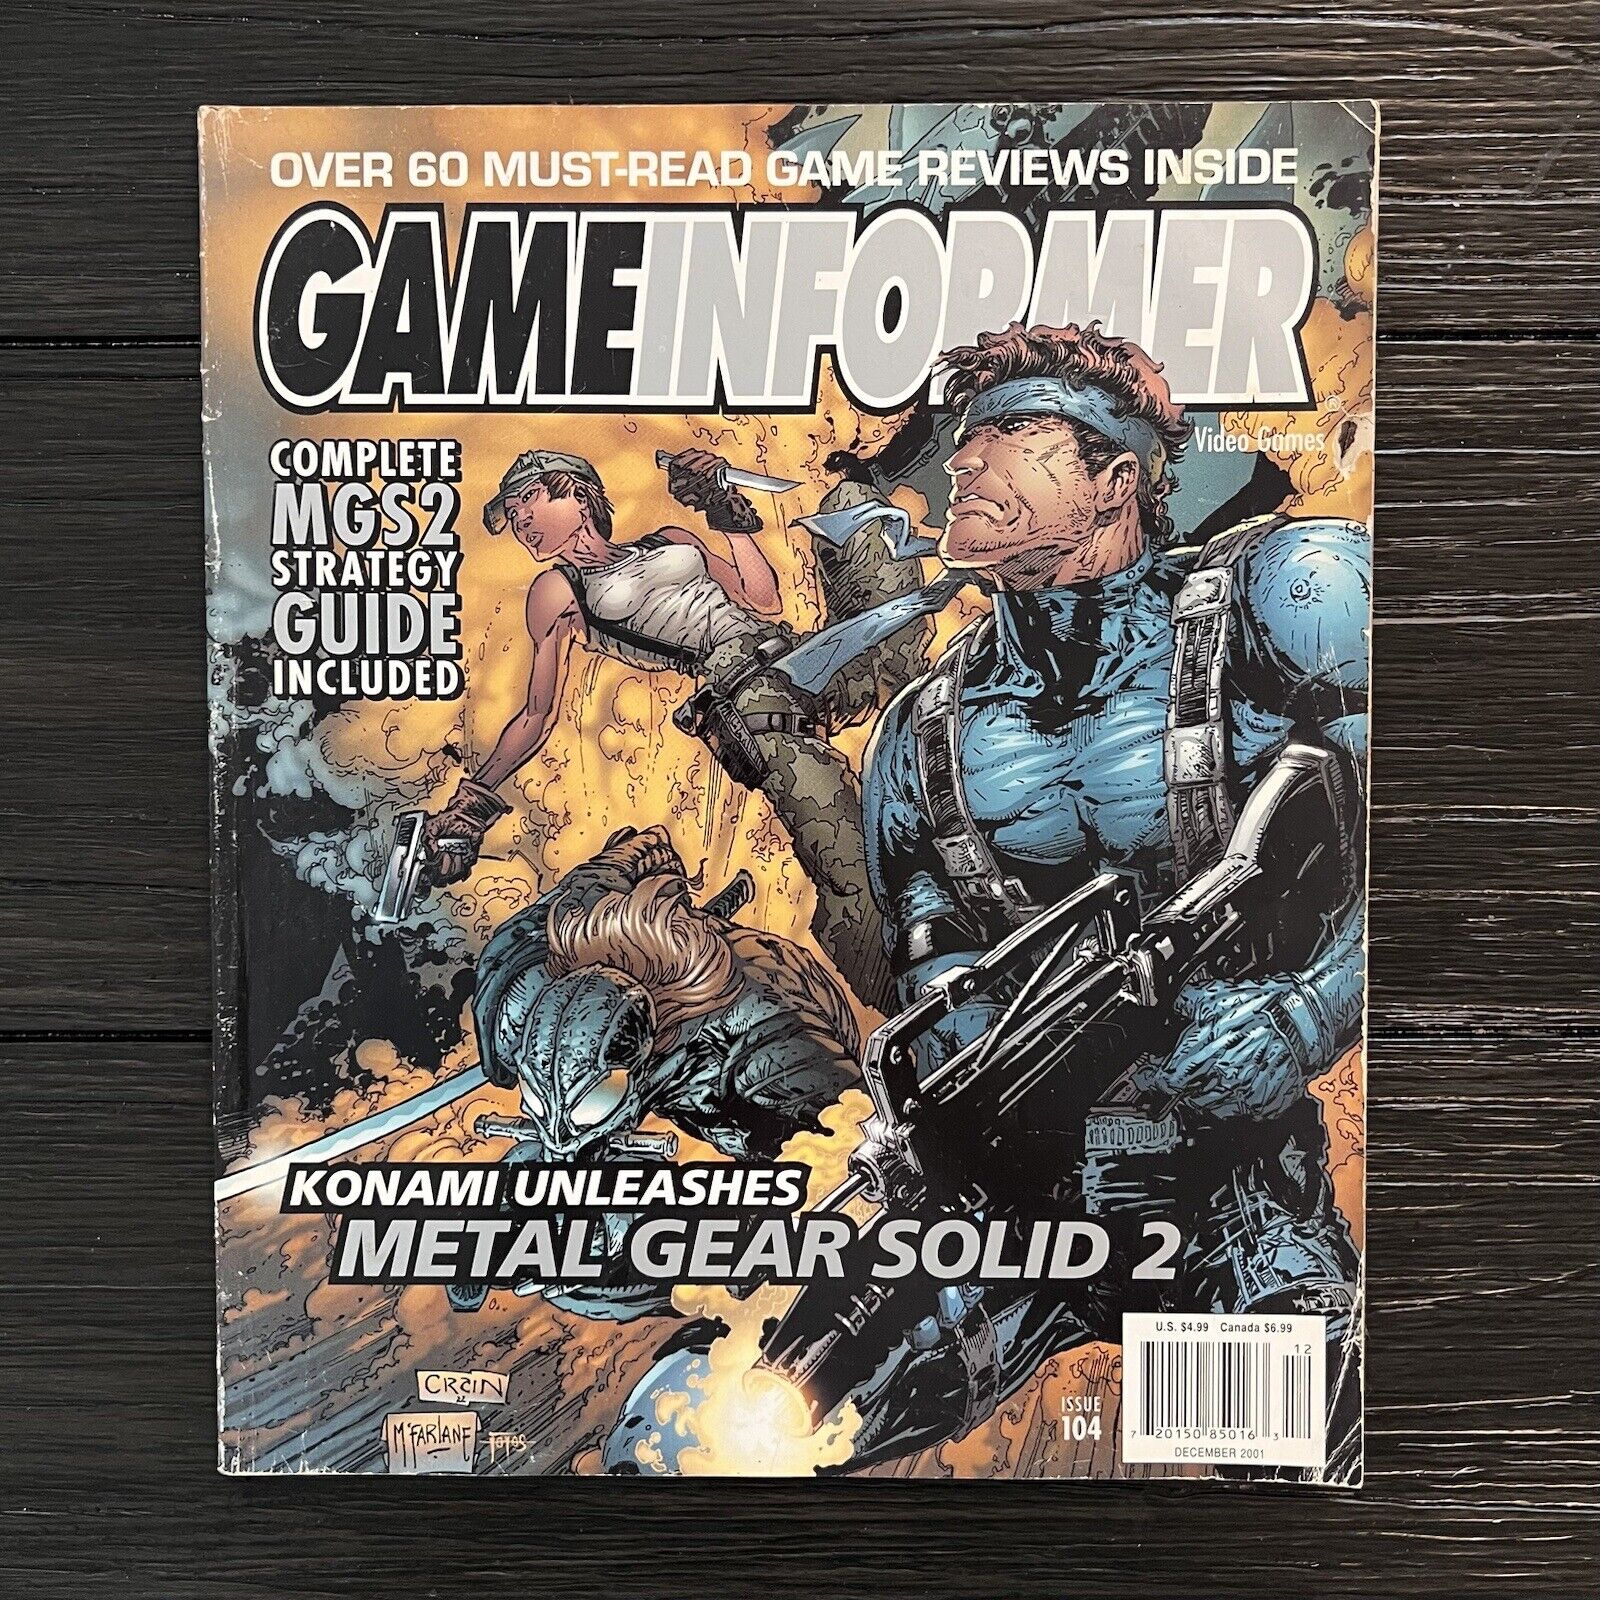 Game Informer Magazine #104 December 2001 Todd McFarlane Cover Art See Photos